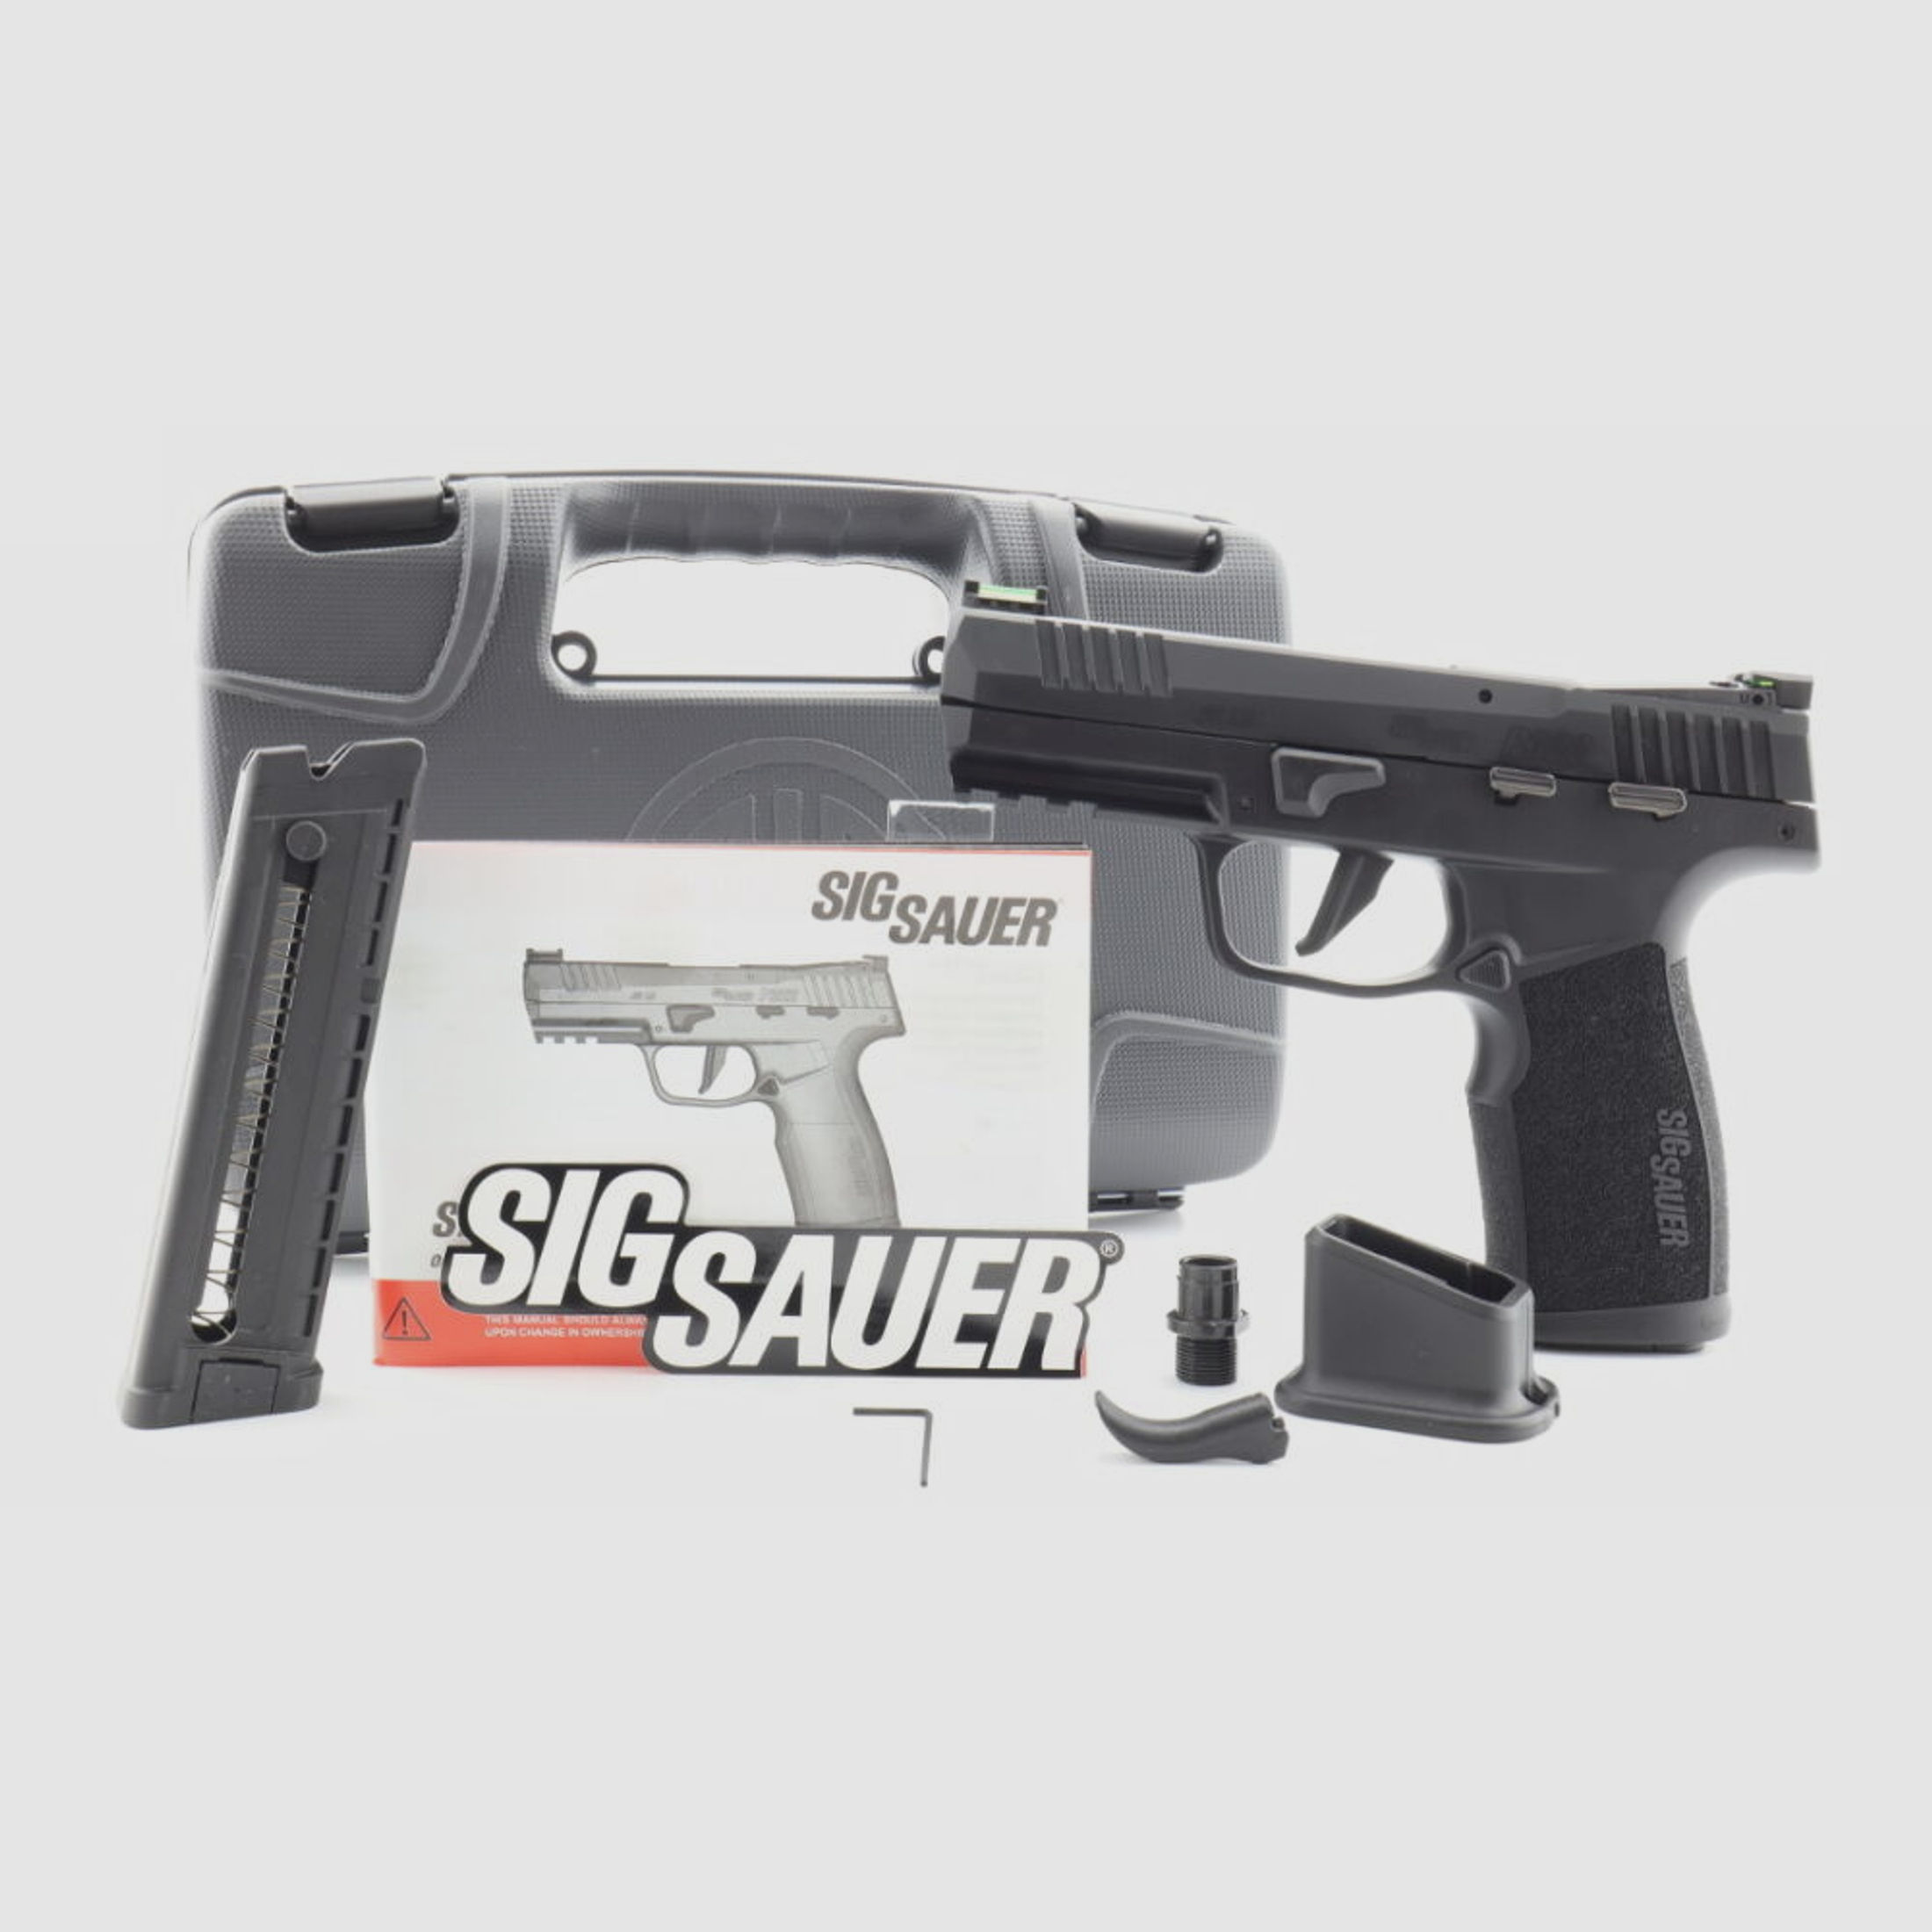 SIG Sauer	 P322 Kleinkaliber Pistole .22l.f.b. HV KK-Pistole